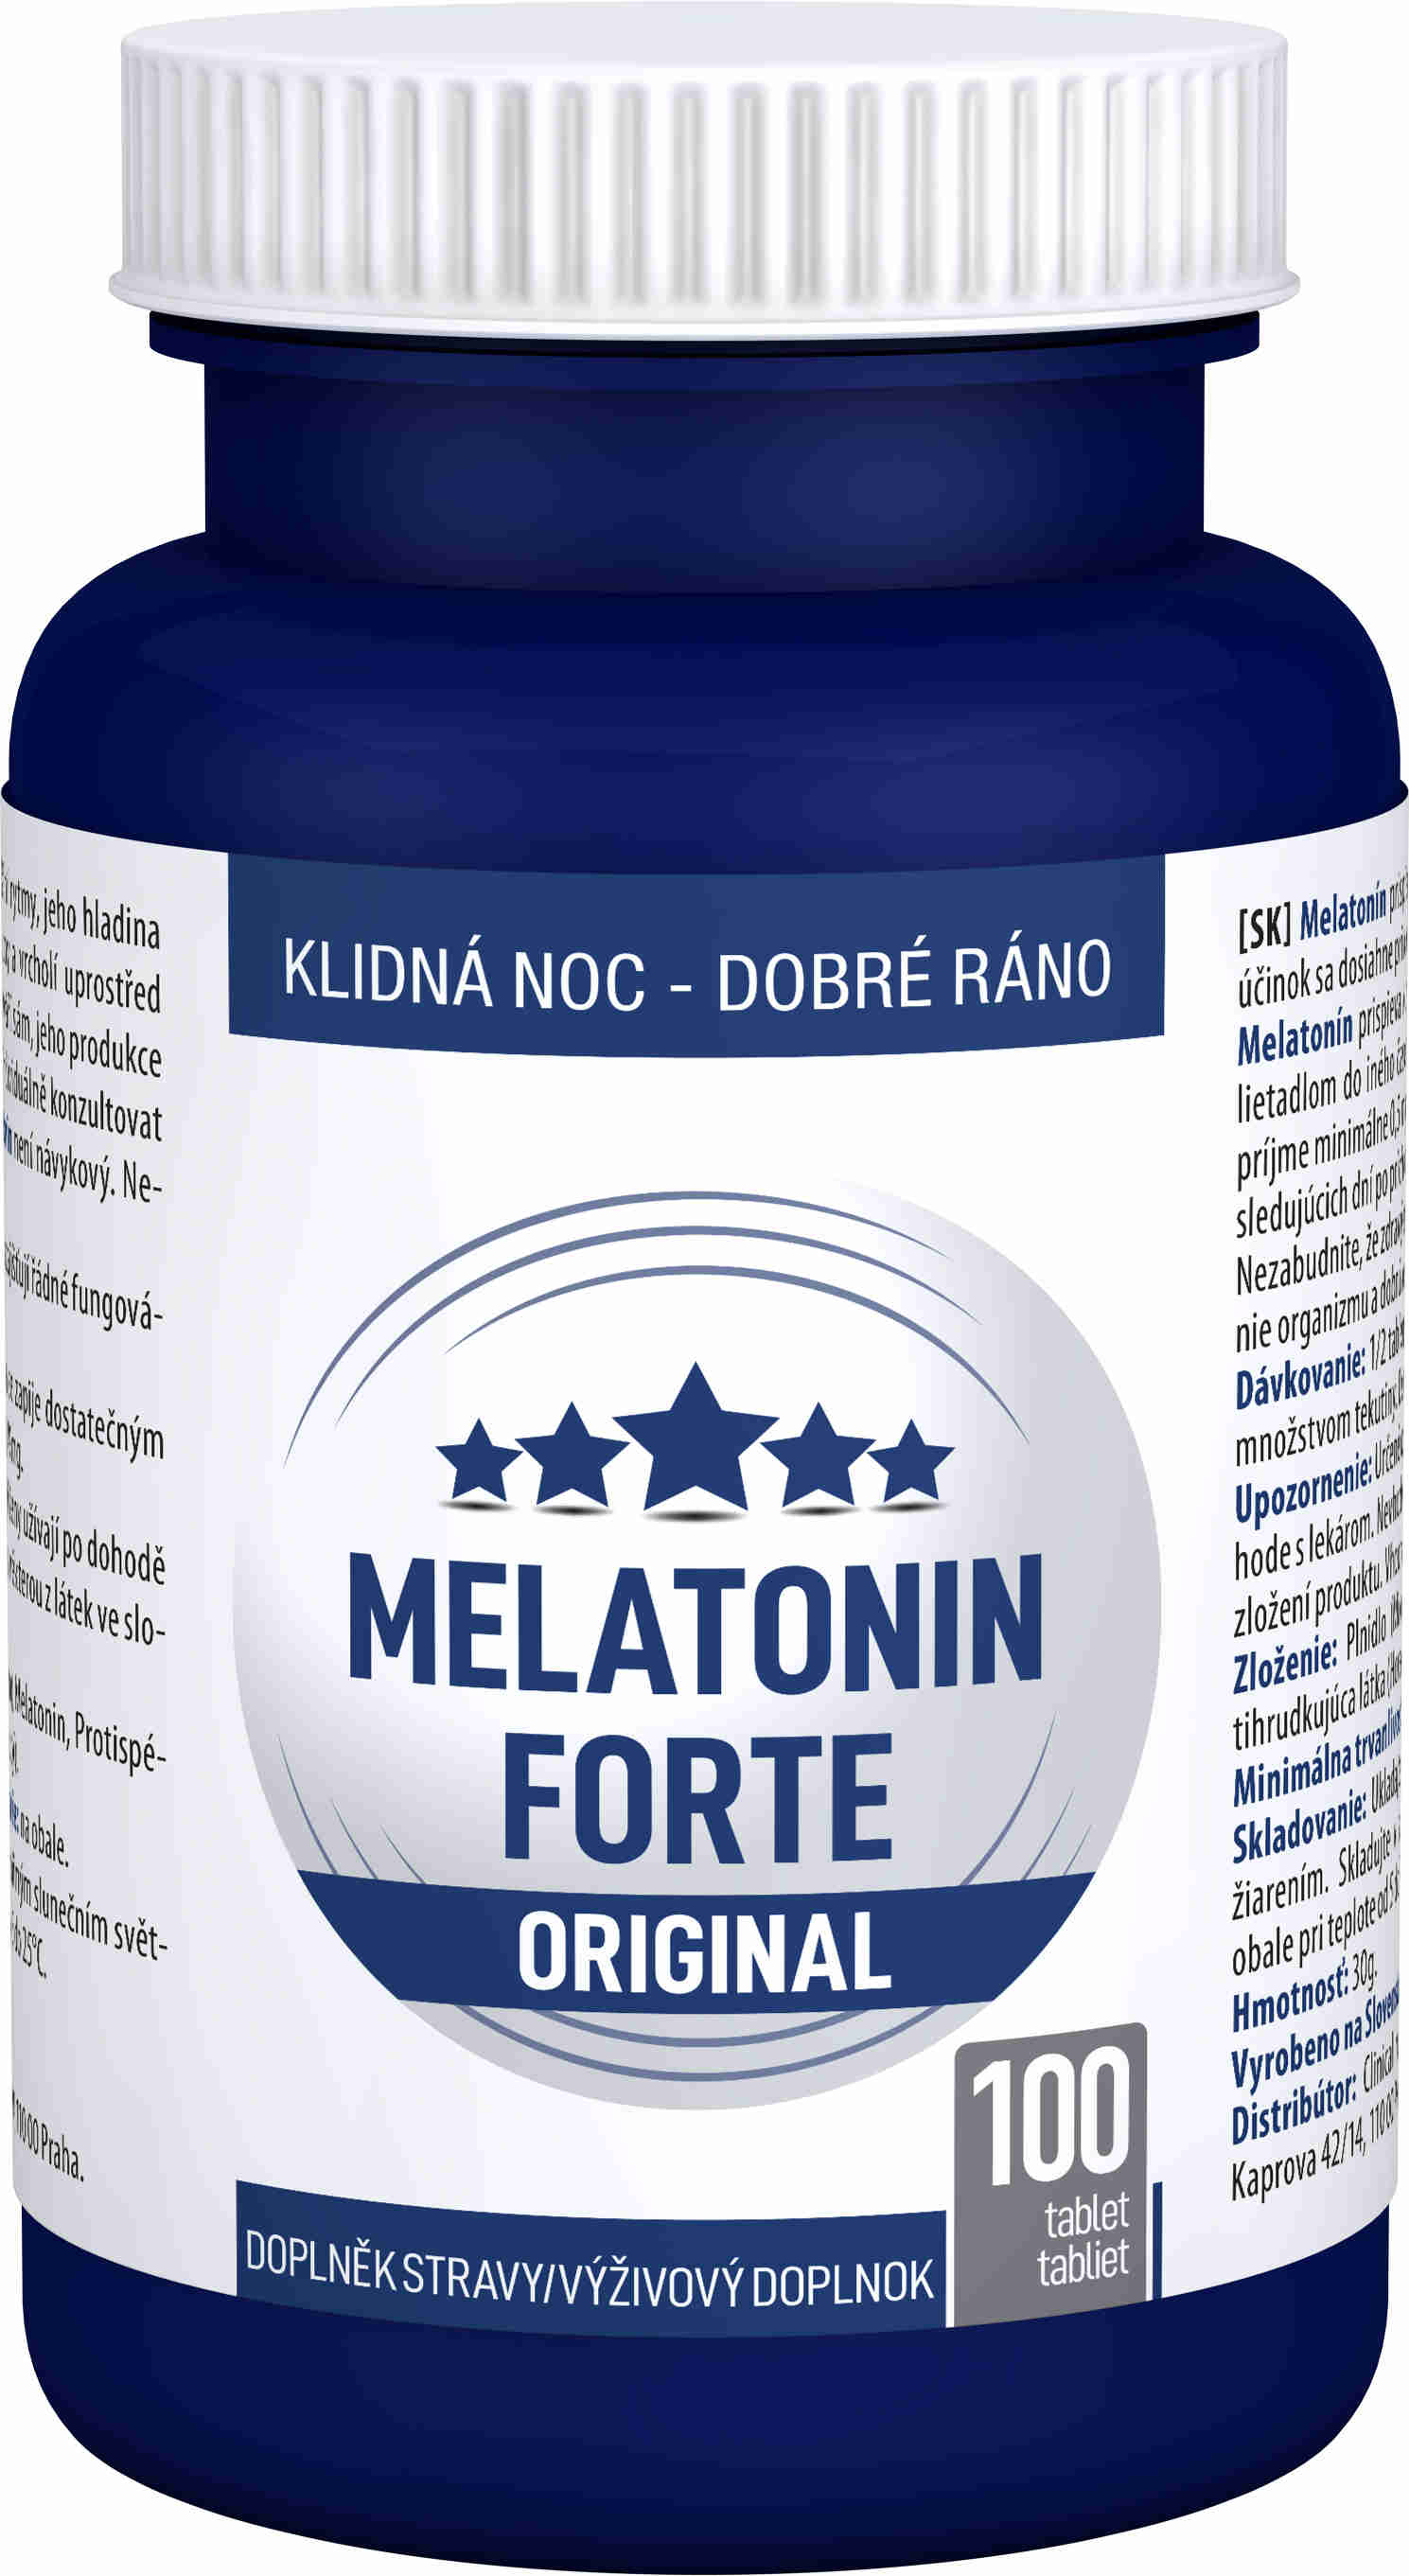 Clinical Melatonin FORTE Original 100 tbl.